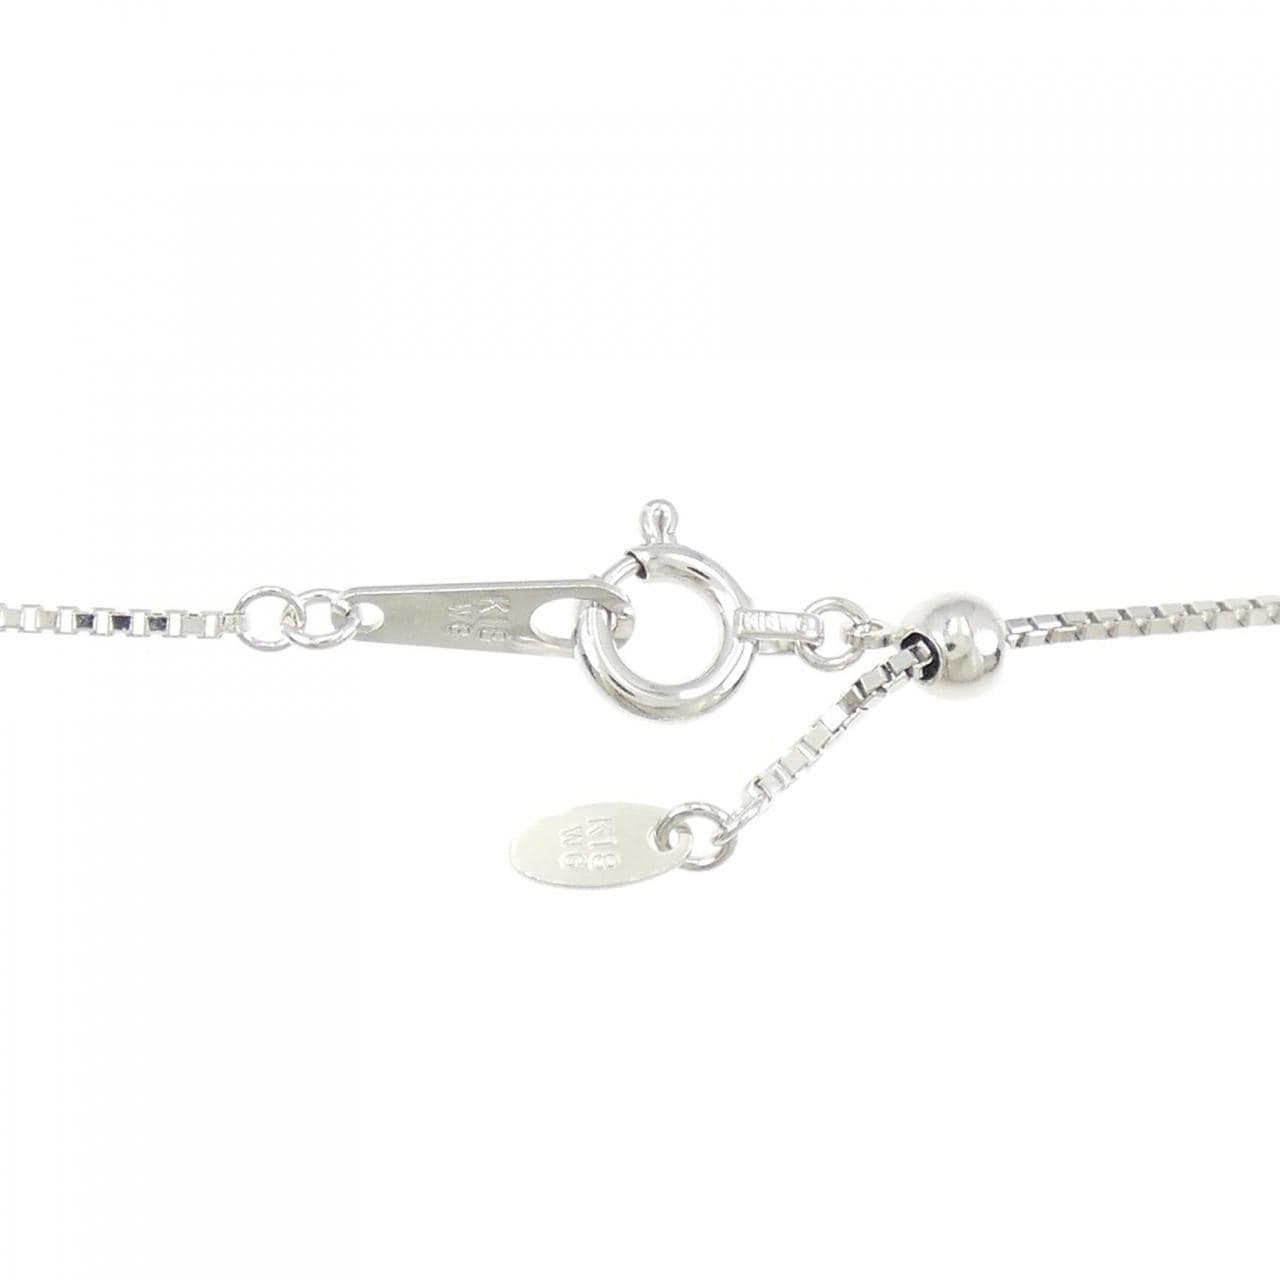 K18WG Garnet necklace 1.57CT